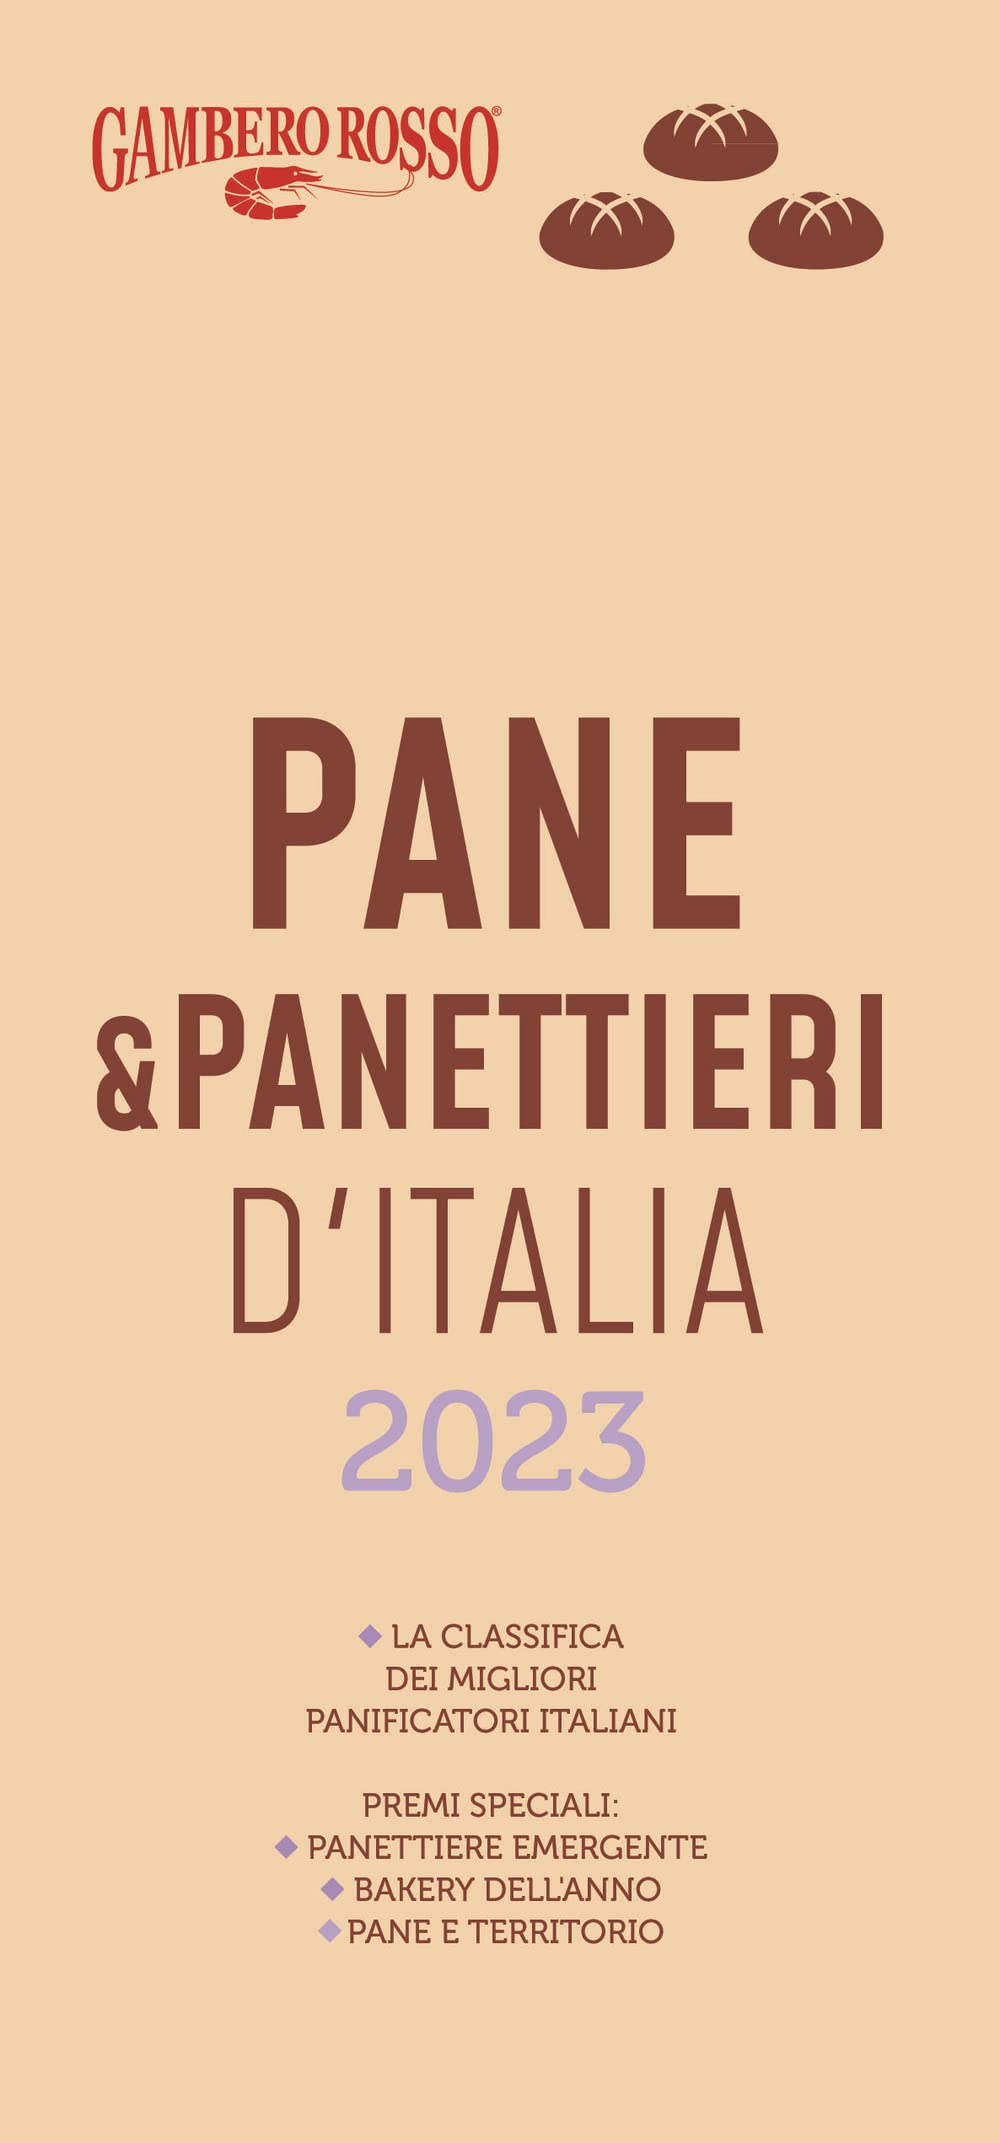 Recensione di Pane & Panettieri D’Italia 2023 – Gambero Rosso